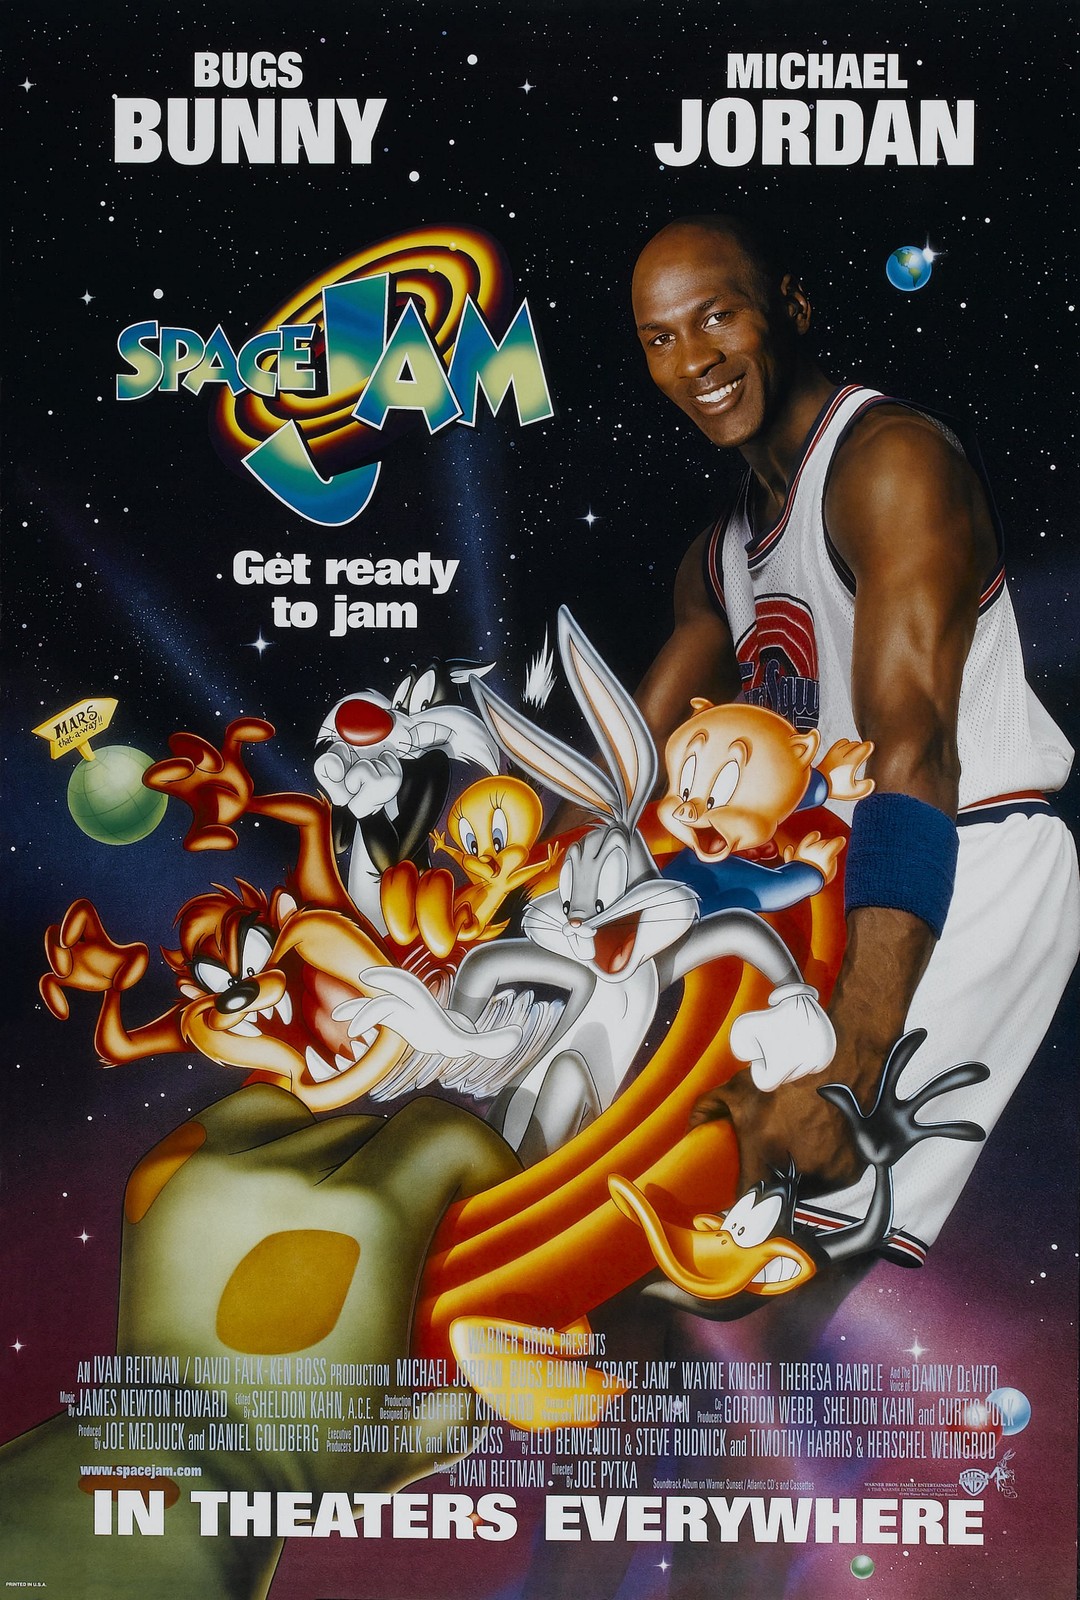 Space Jam Michael Jordan 1996 Movie Poster Art Film Print 24x36 27x40" 32x48" #2 - $10.90 - $24.90